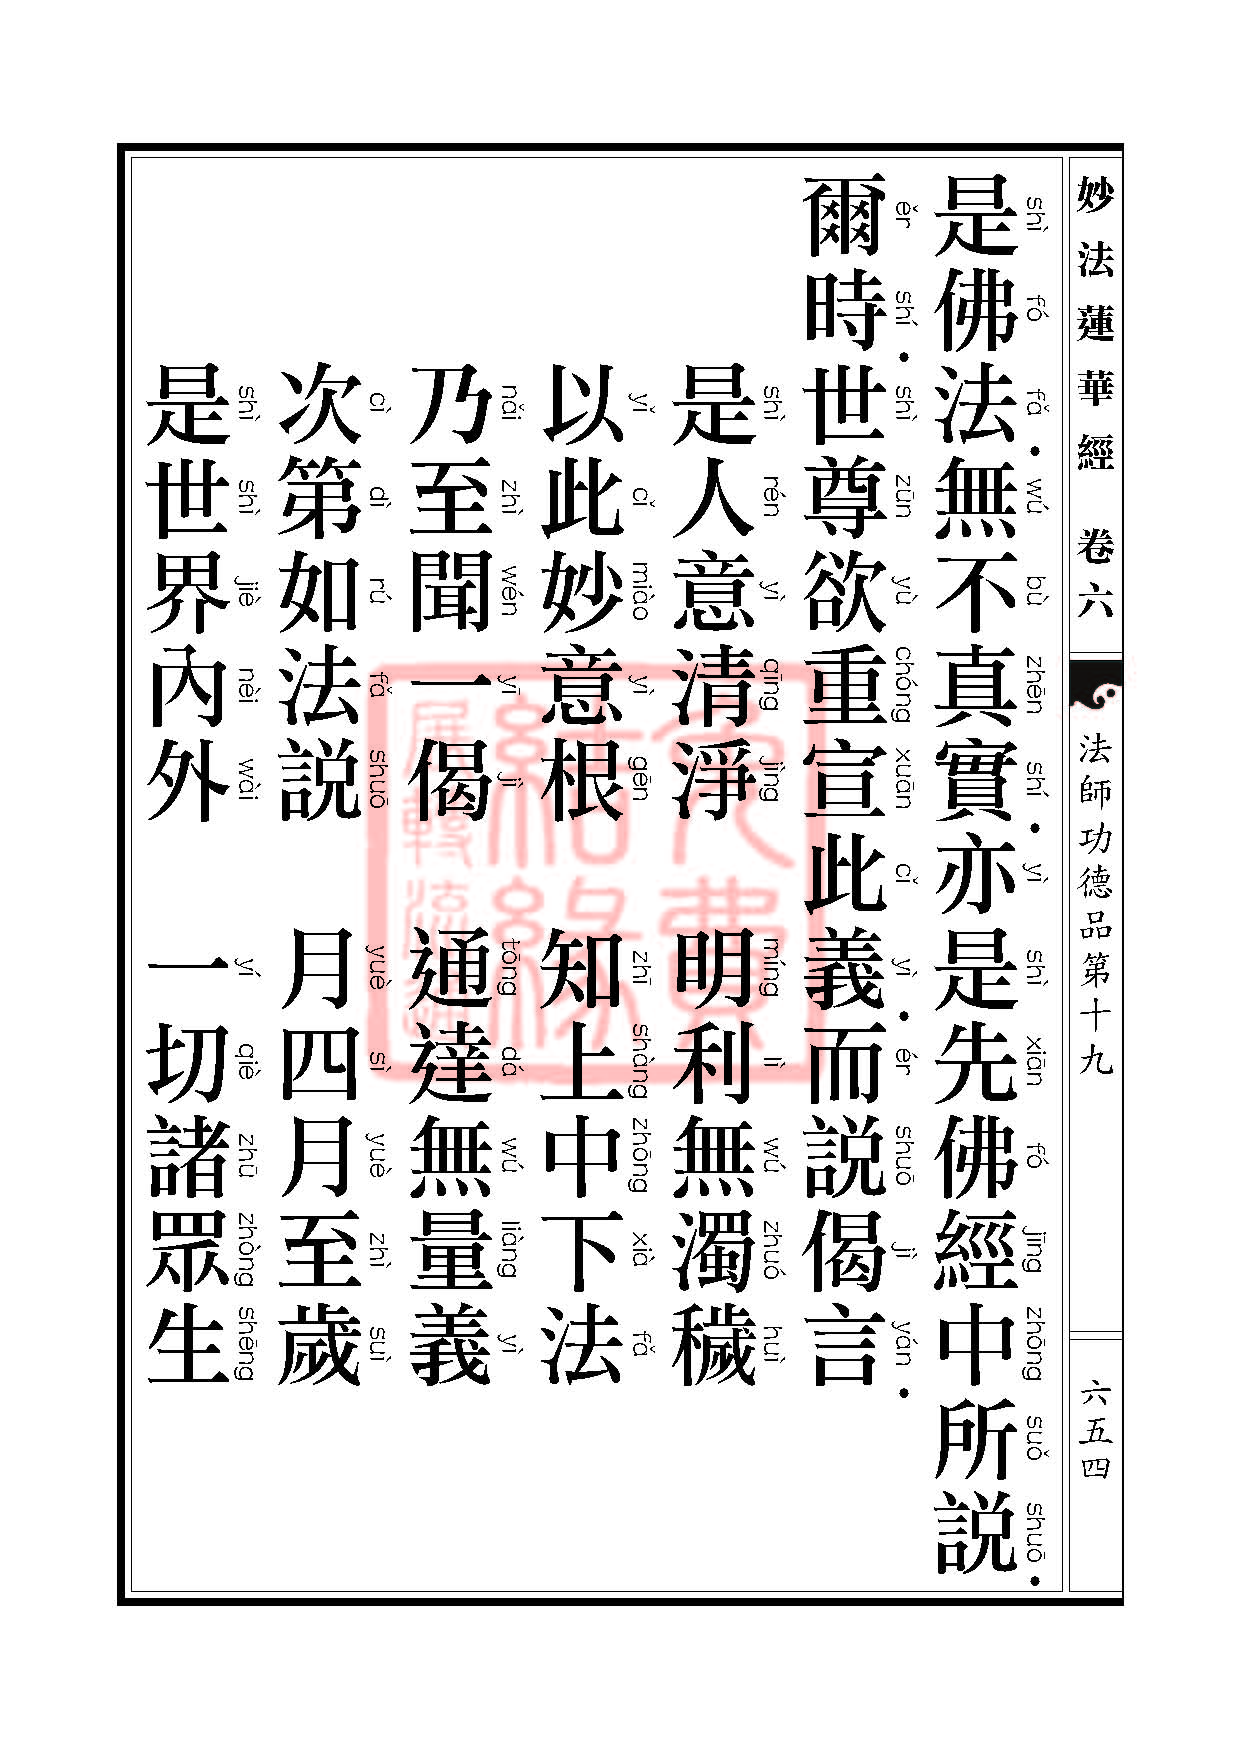 Book_FHJ_HK-A6-PY_Web_页面_654.jpg